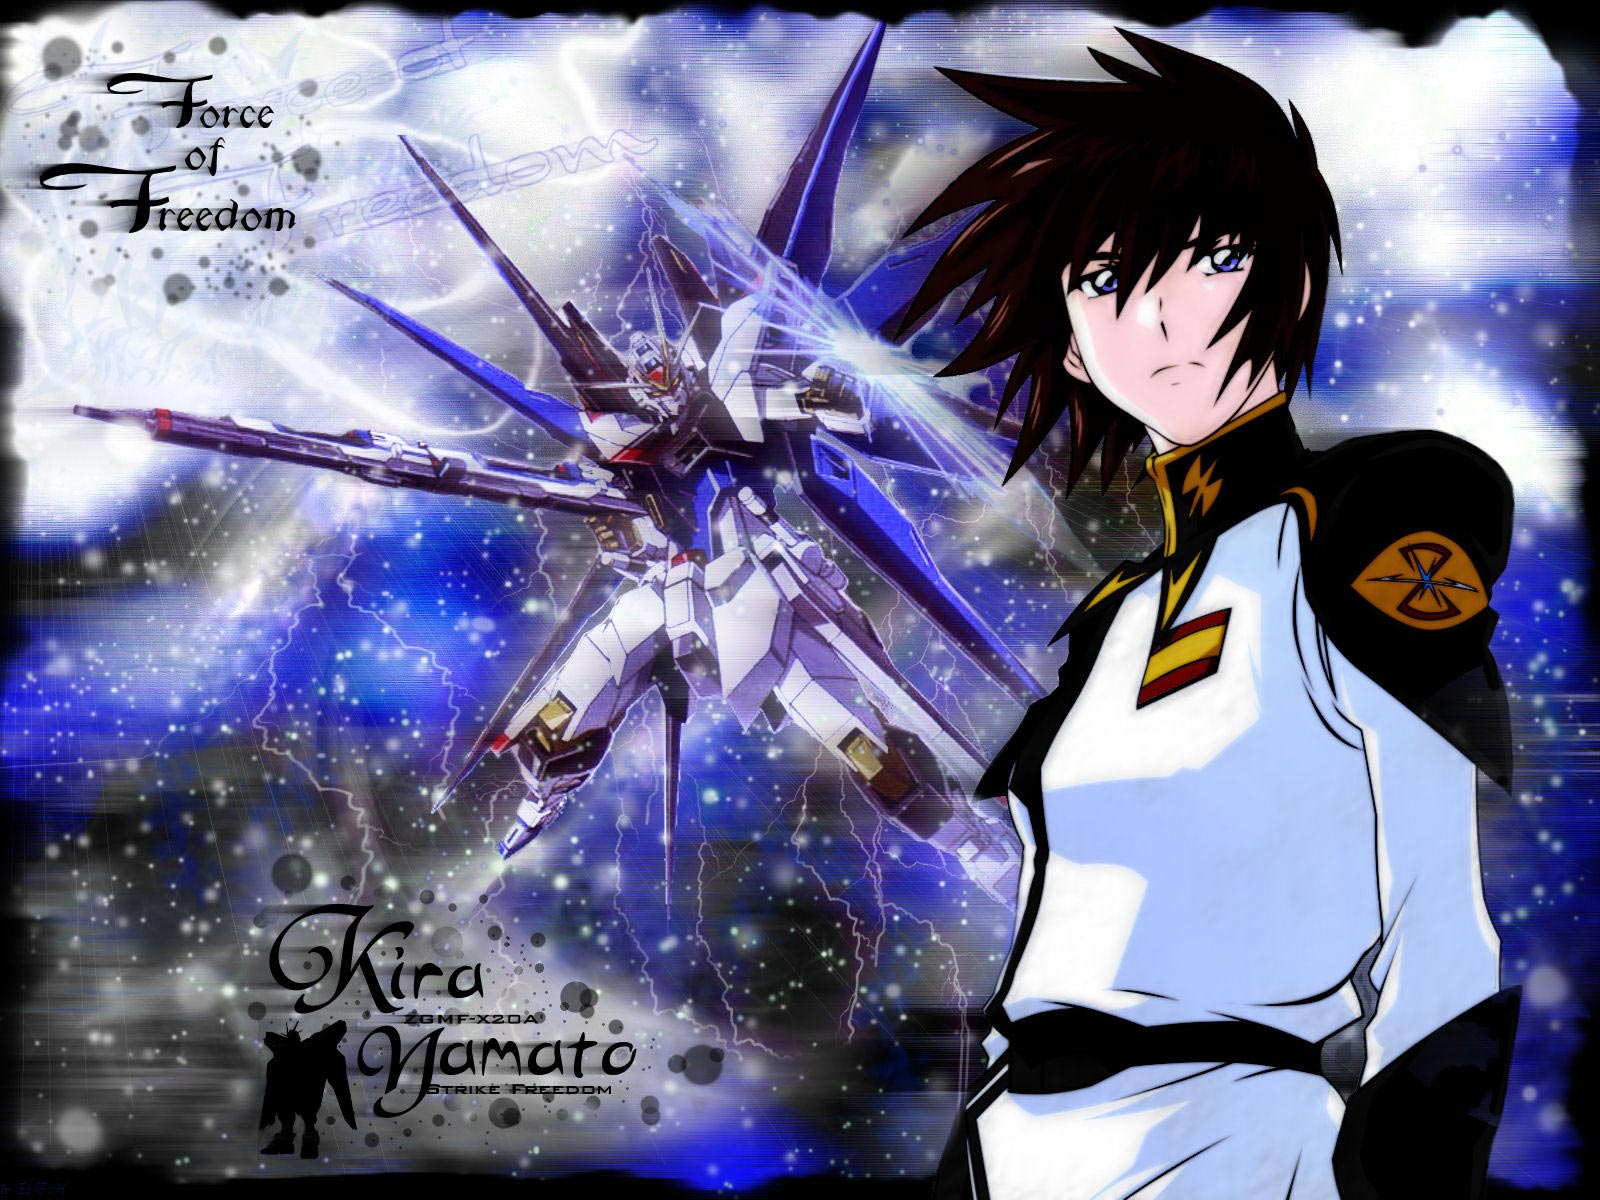 Kira Yamato از انیمه Gundam با لباس خلبانی در کنار Freedom Fighter